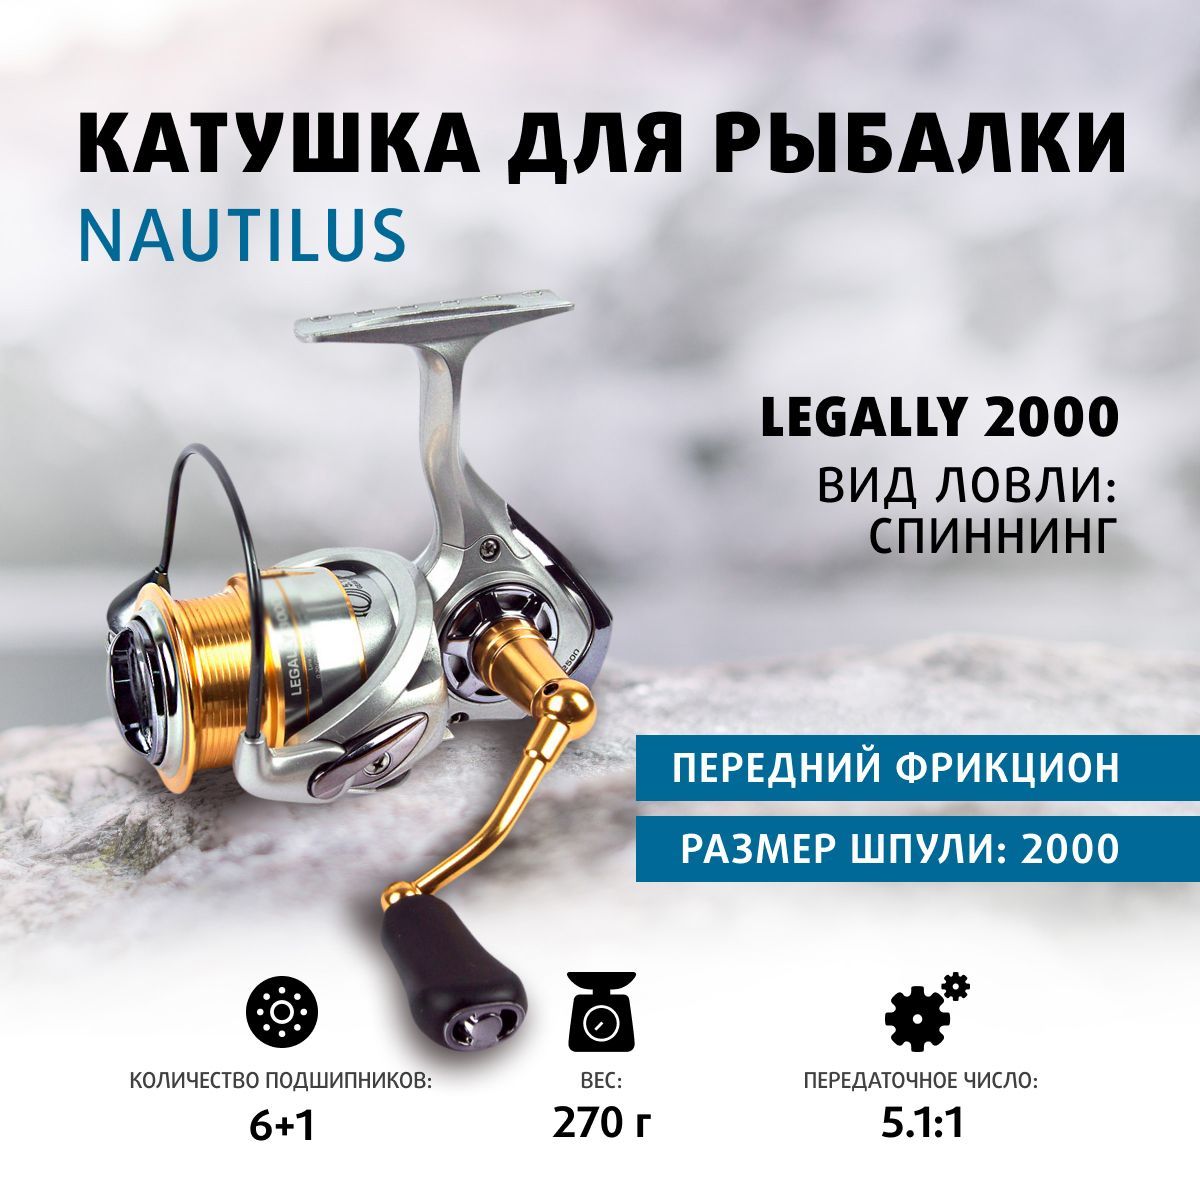 Nautilus/КатушкарыболовнаябезынерционнаядляспиннингаLegally2000/длящуки,судака,леща,карася,плотвы